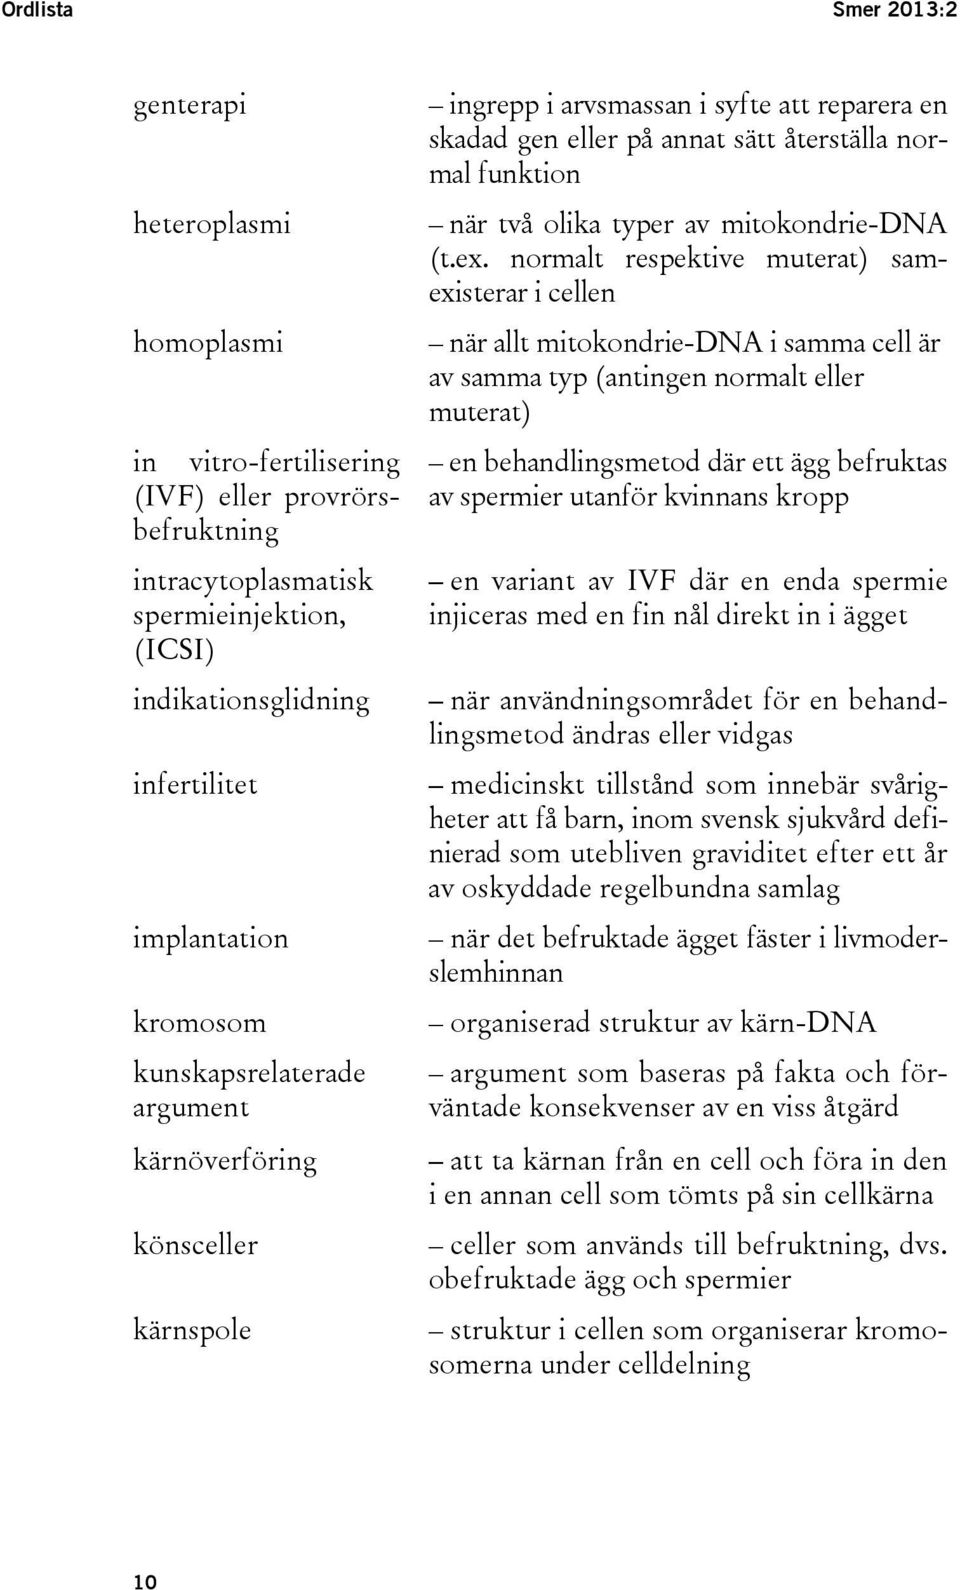 olika typer av mitokondrie-dna (t.ex.